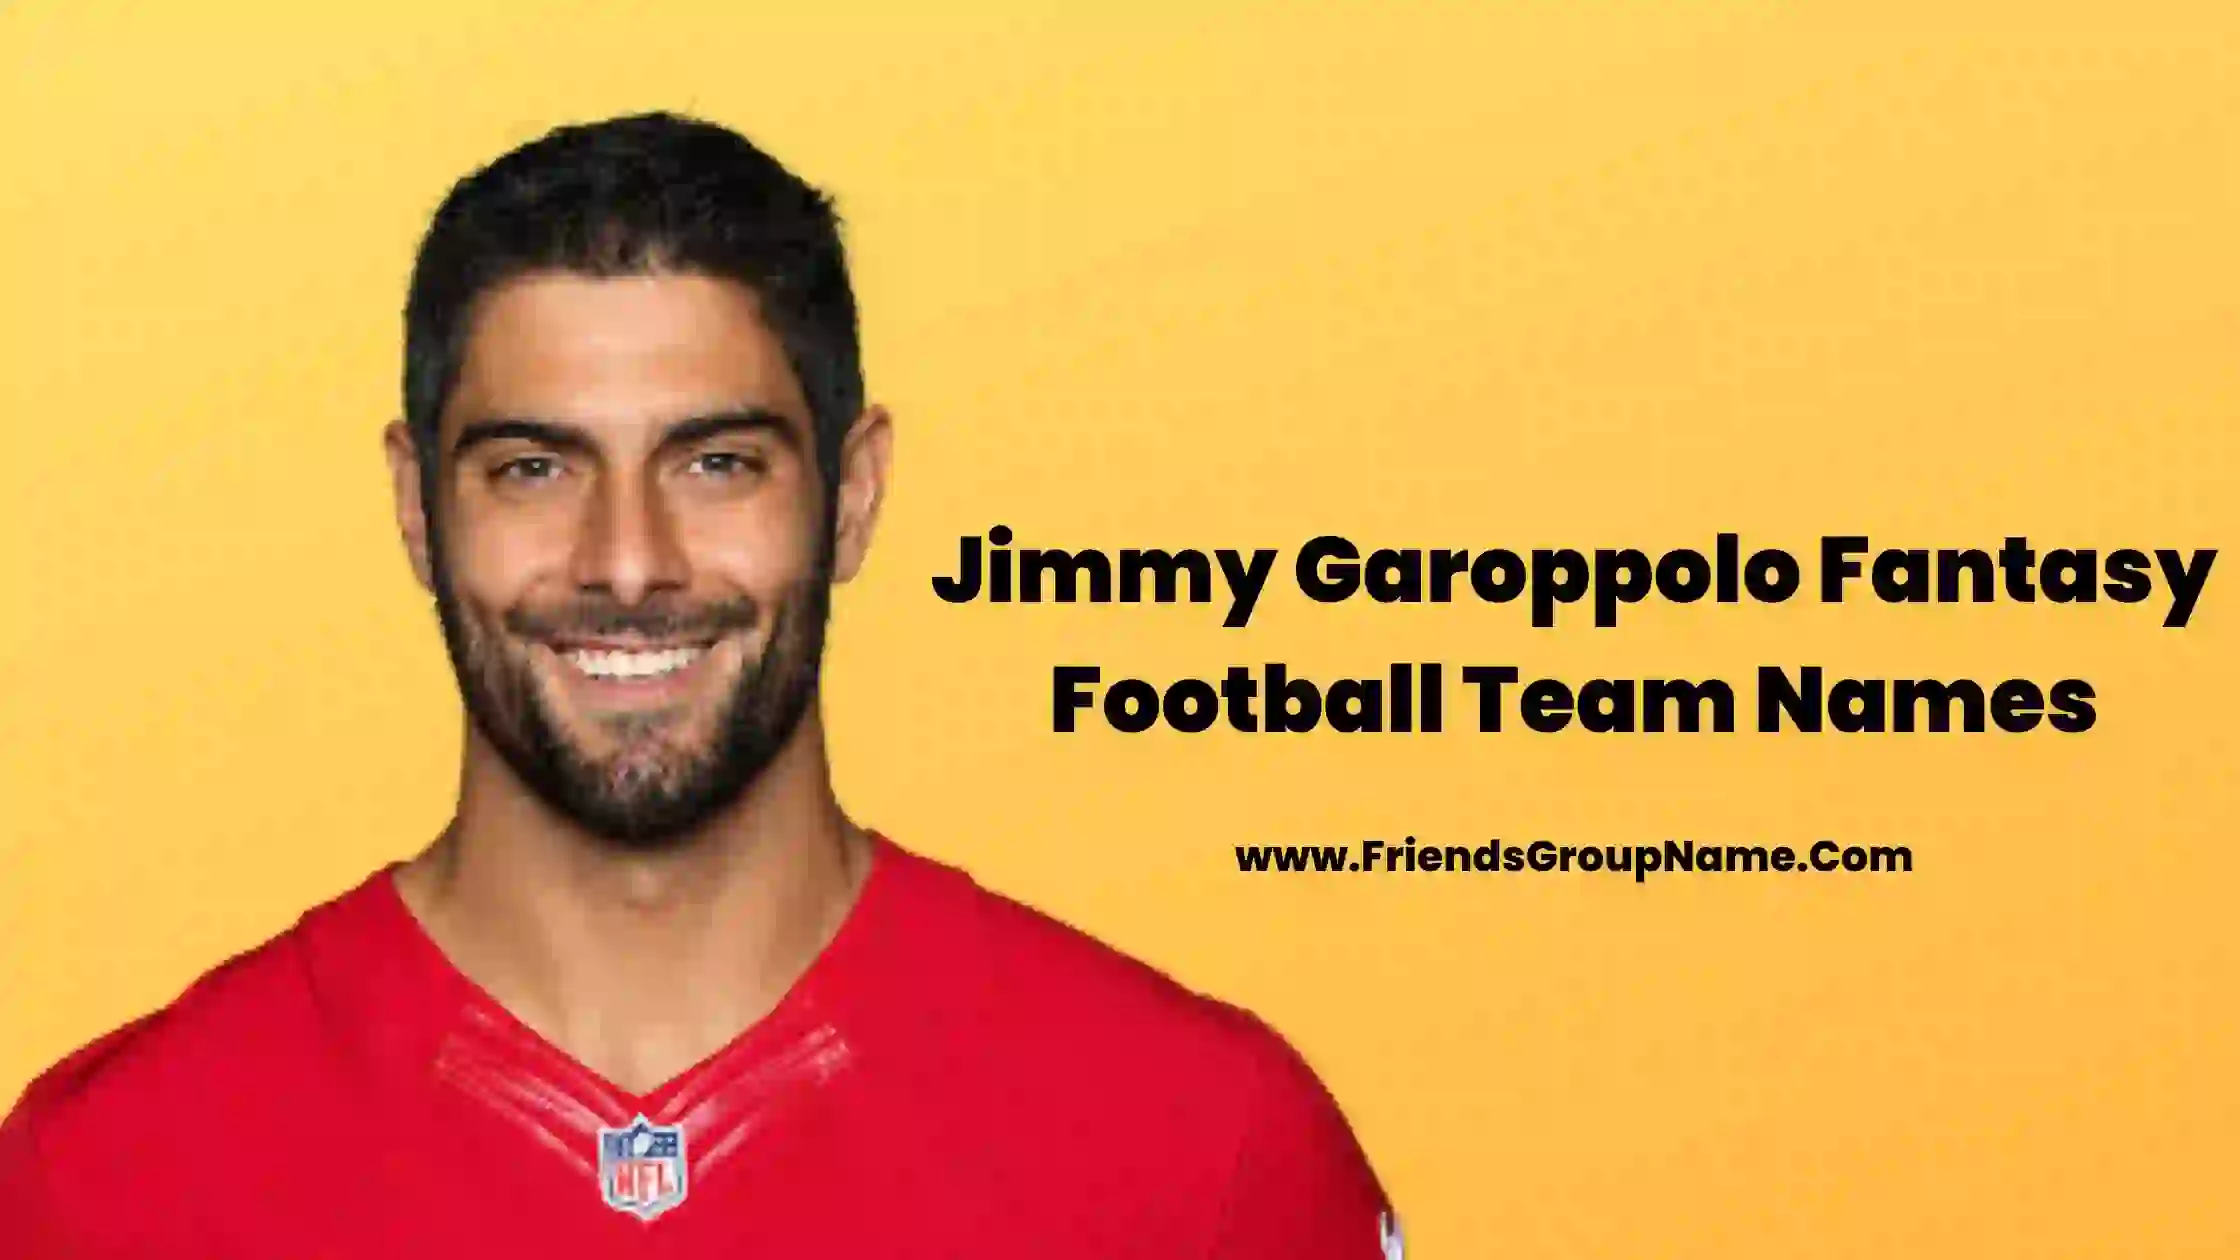 Jimmy Garoppolo Fantasy Football Team Names